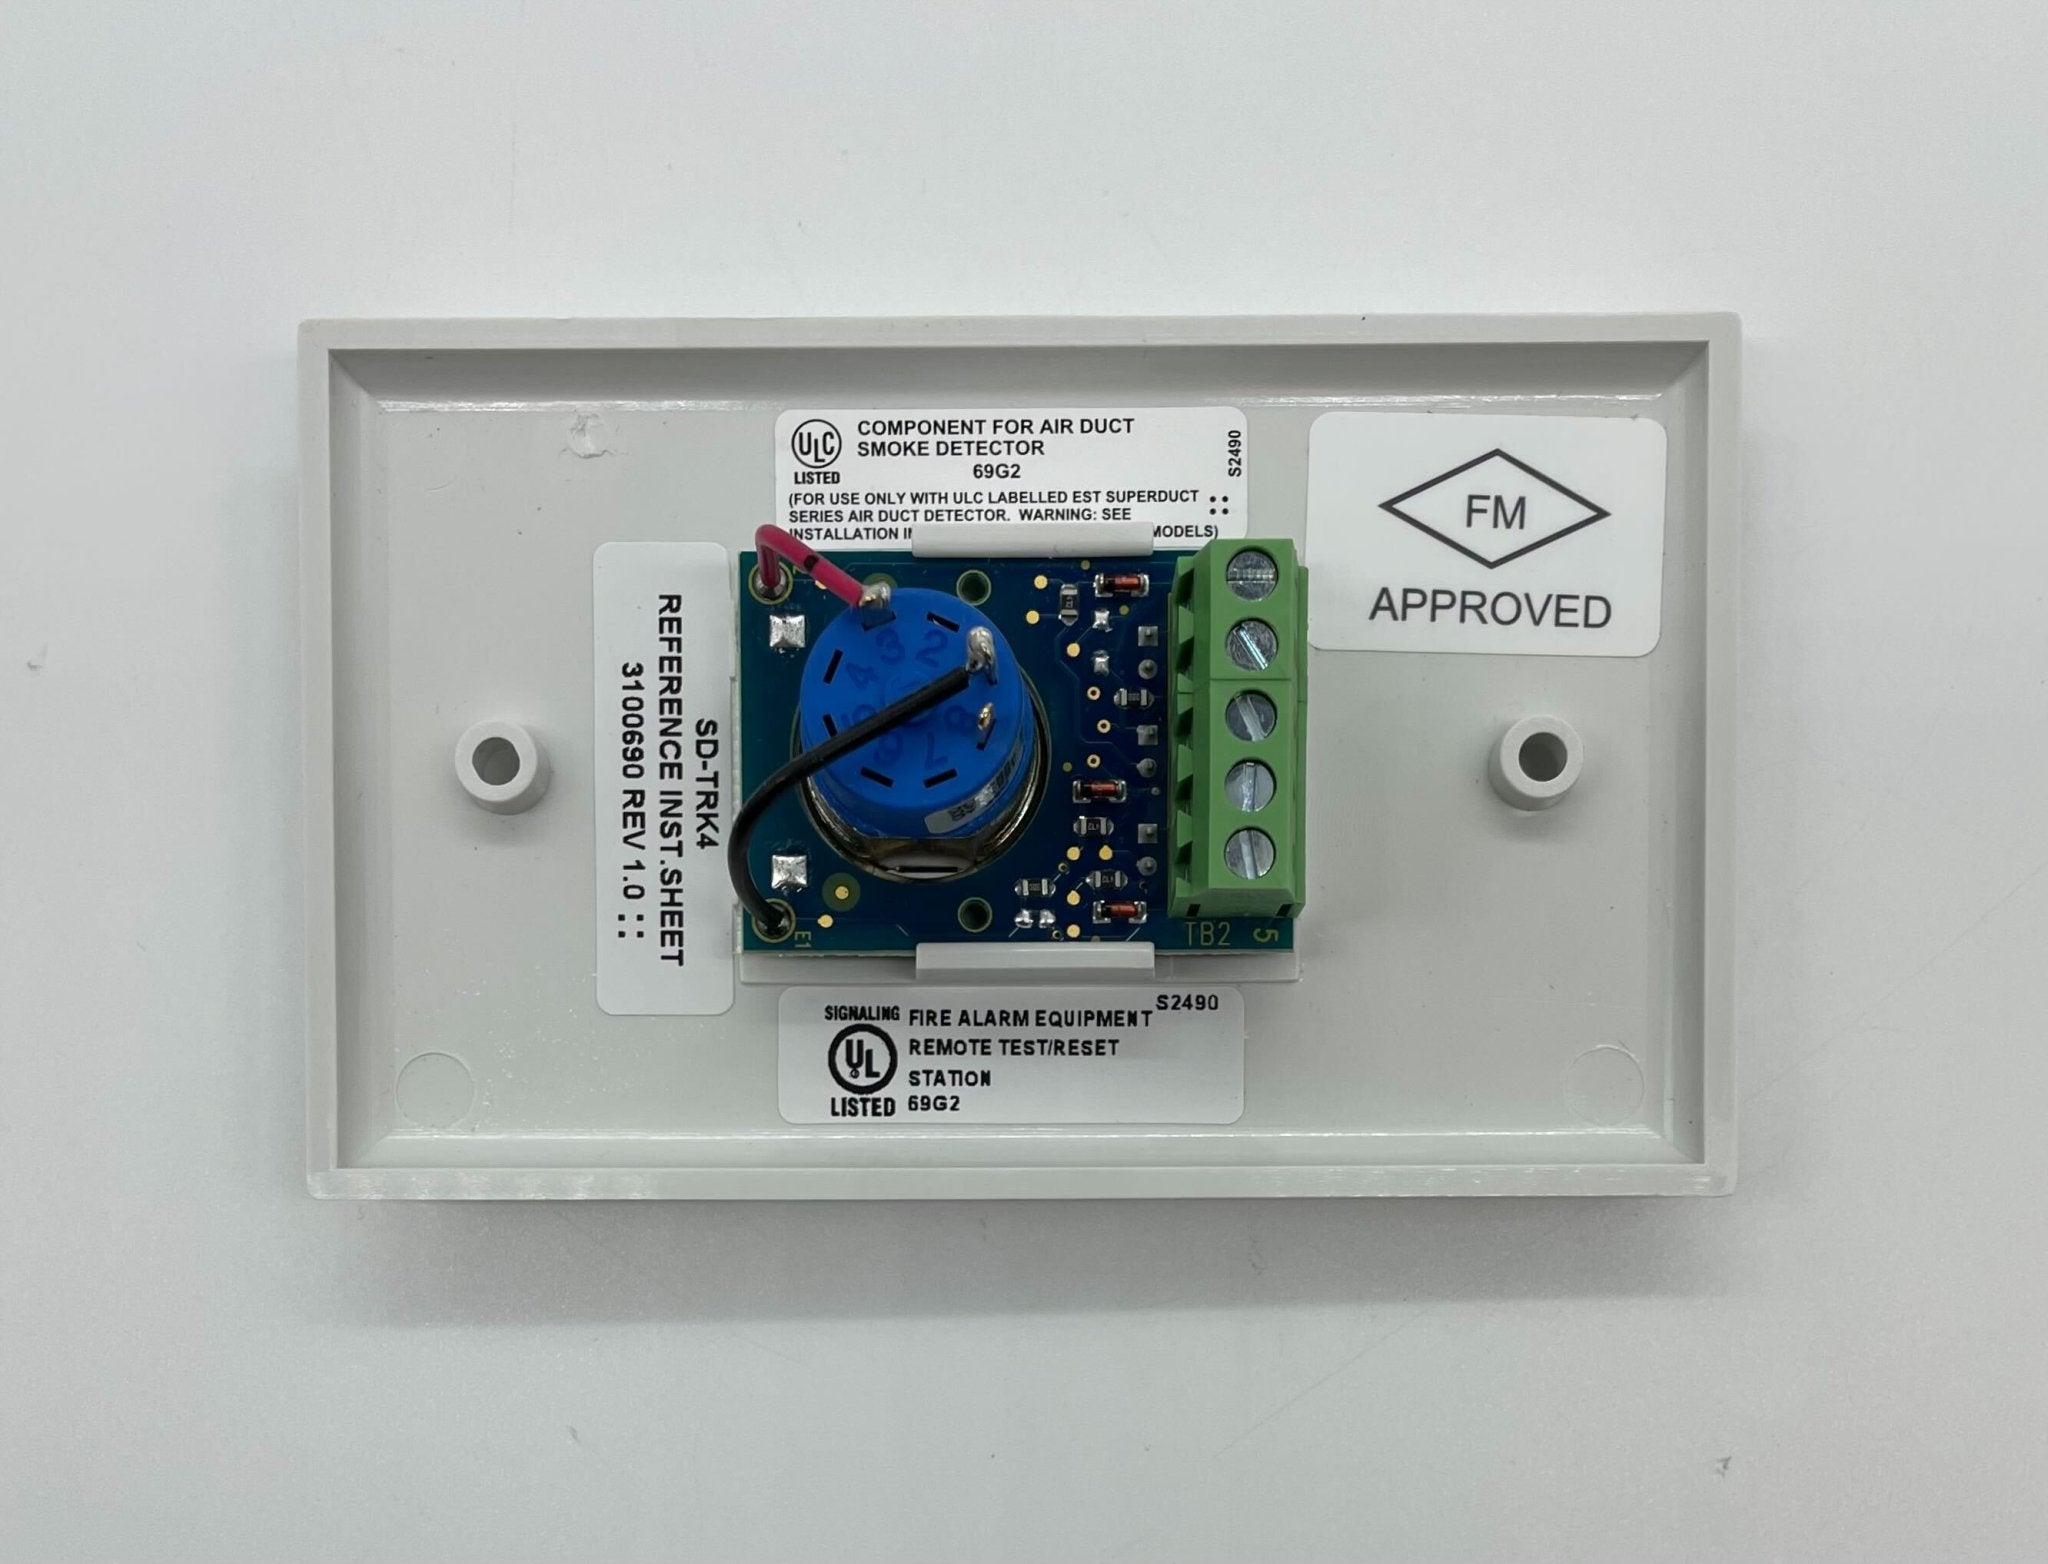 Edwards SD-TRK4 - The Fire Alarm Supplier